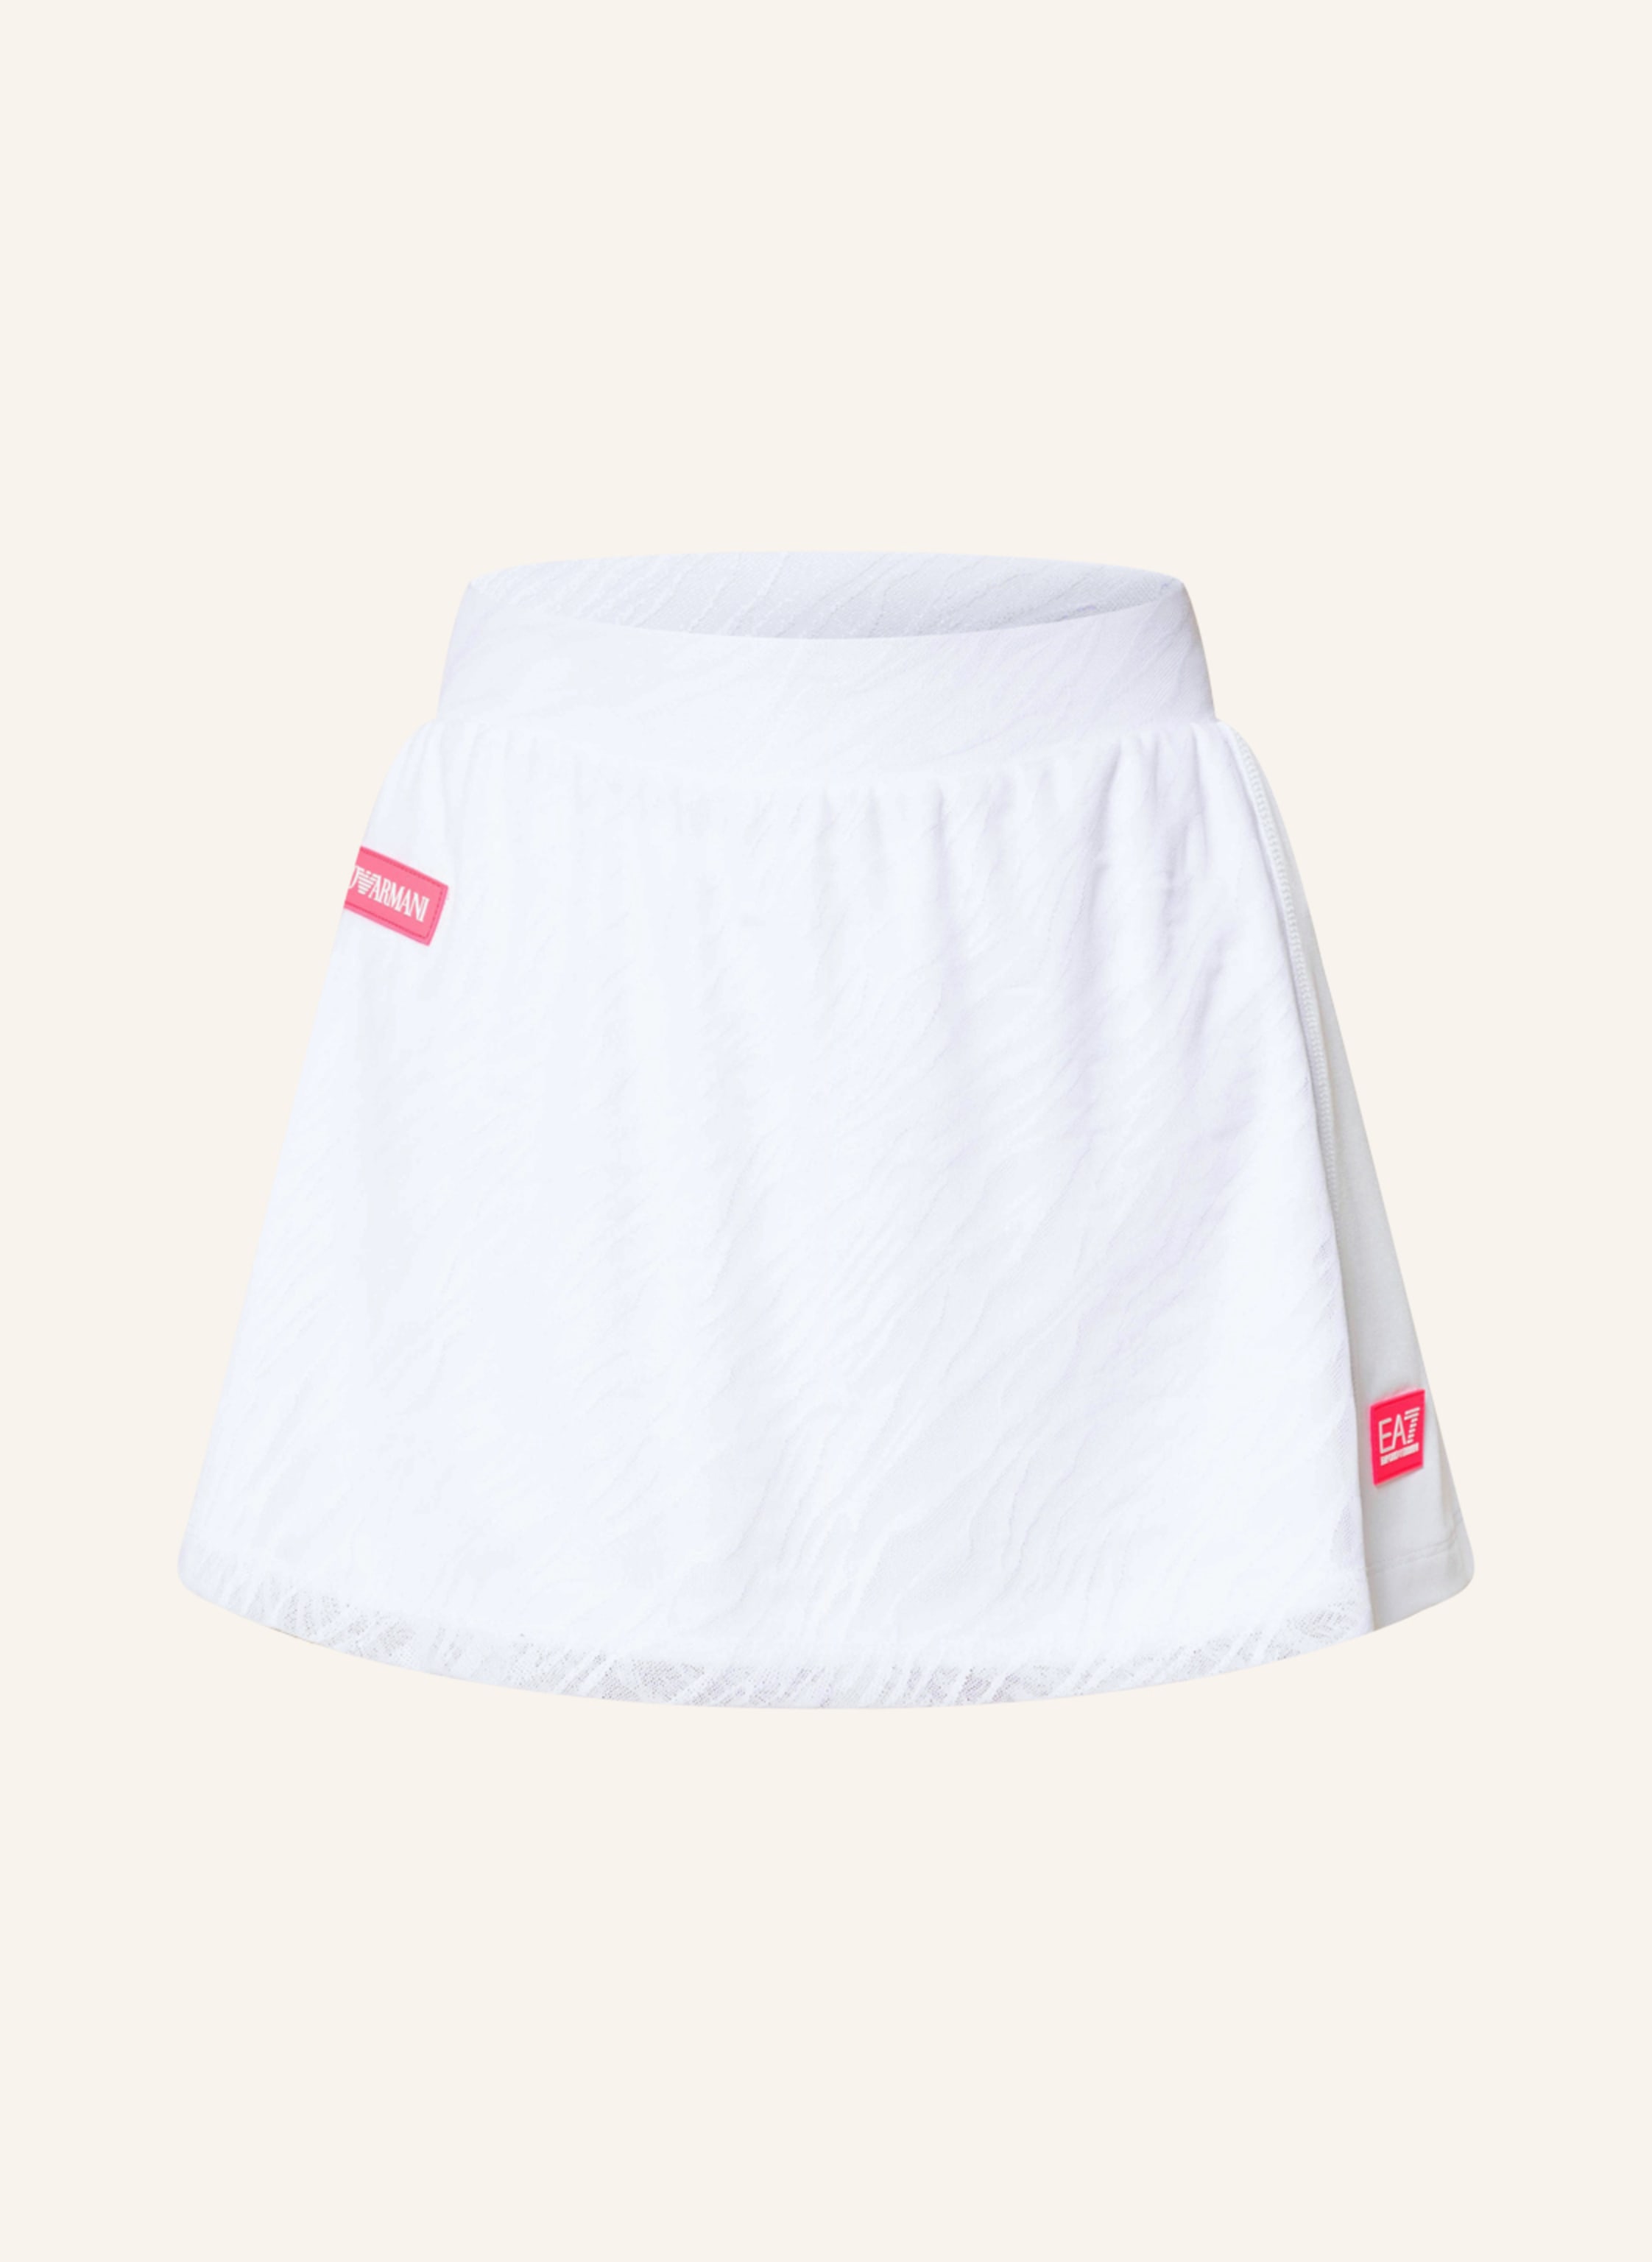 EA7 EMPORIO ARMANI Tennis skirt with mesh in white | Breuninger